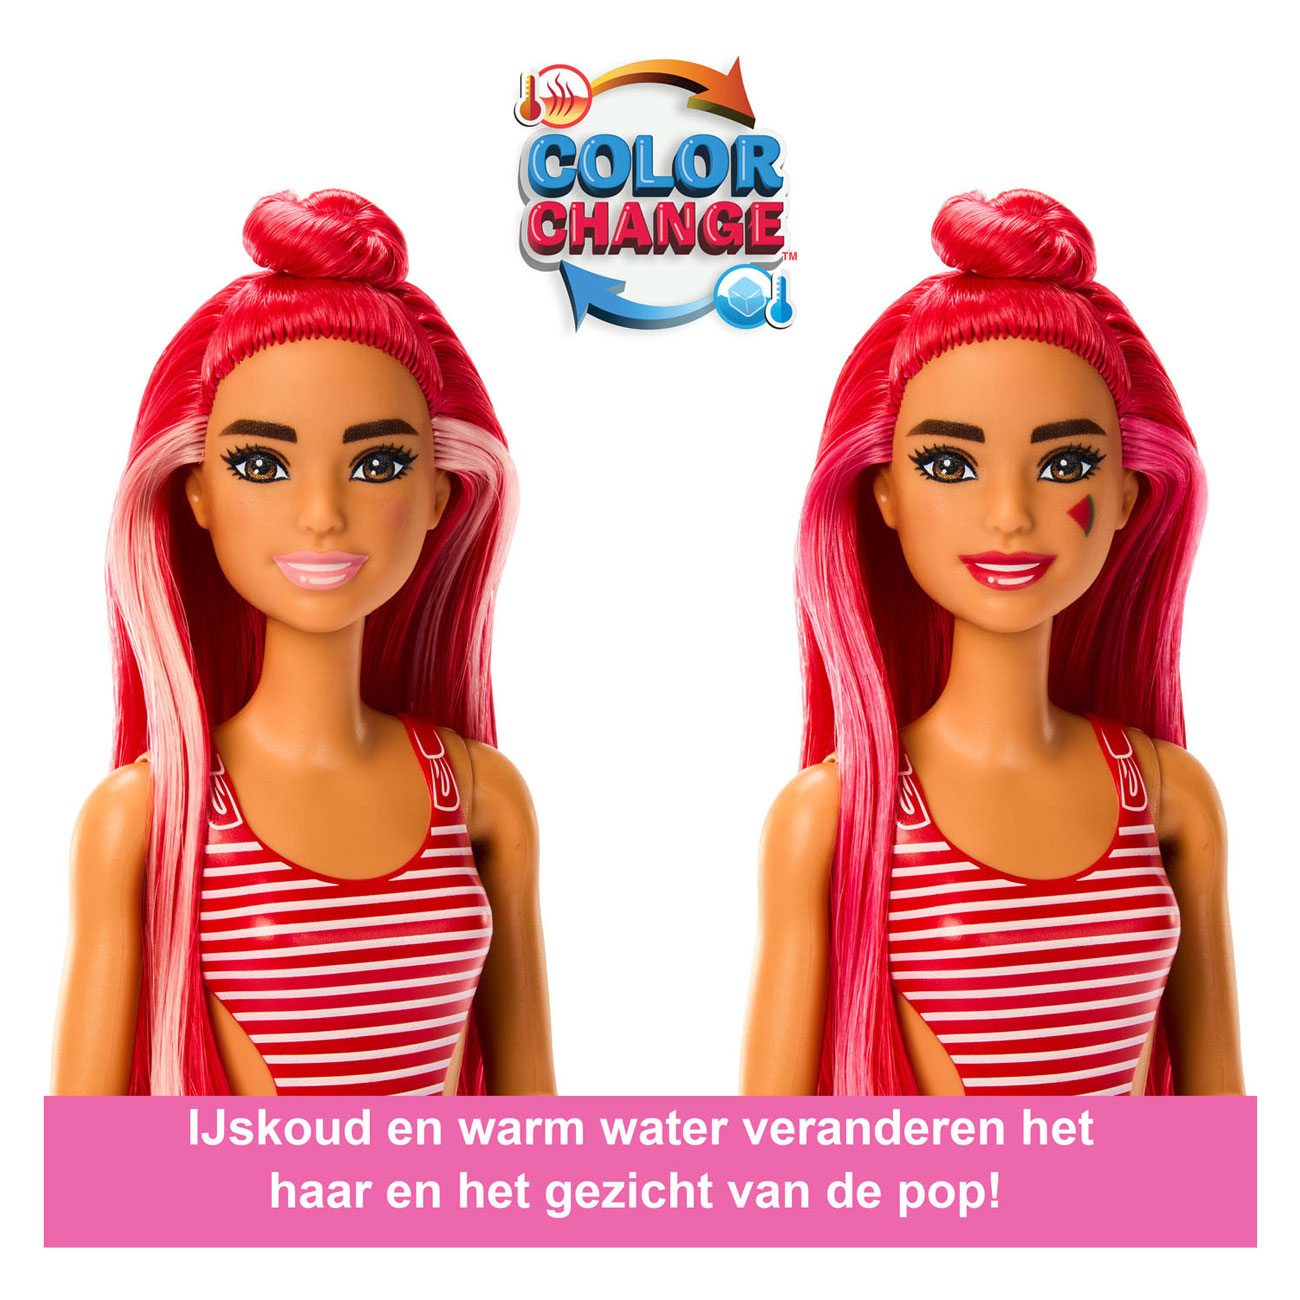 Barbie Reveal Doll Juicy Fruits Series – Watermelon Crush